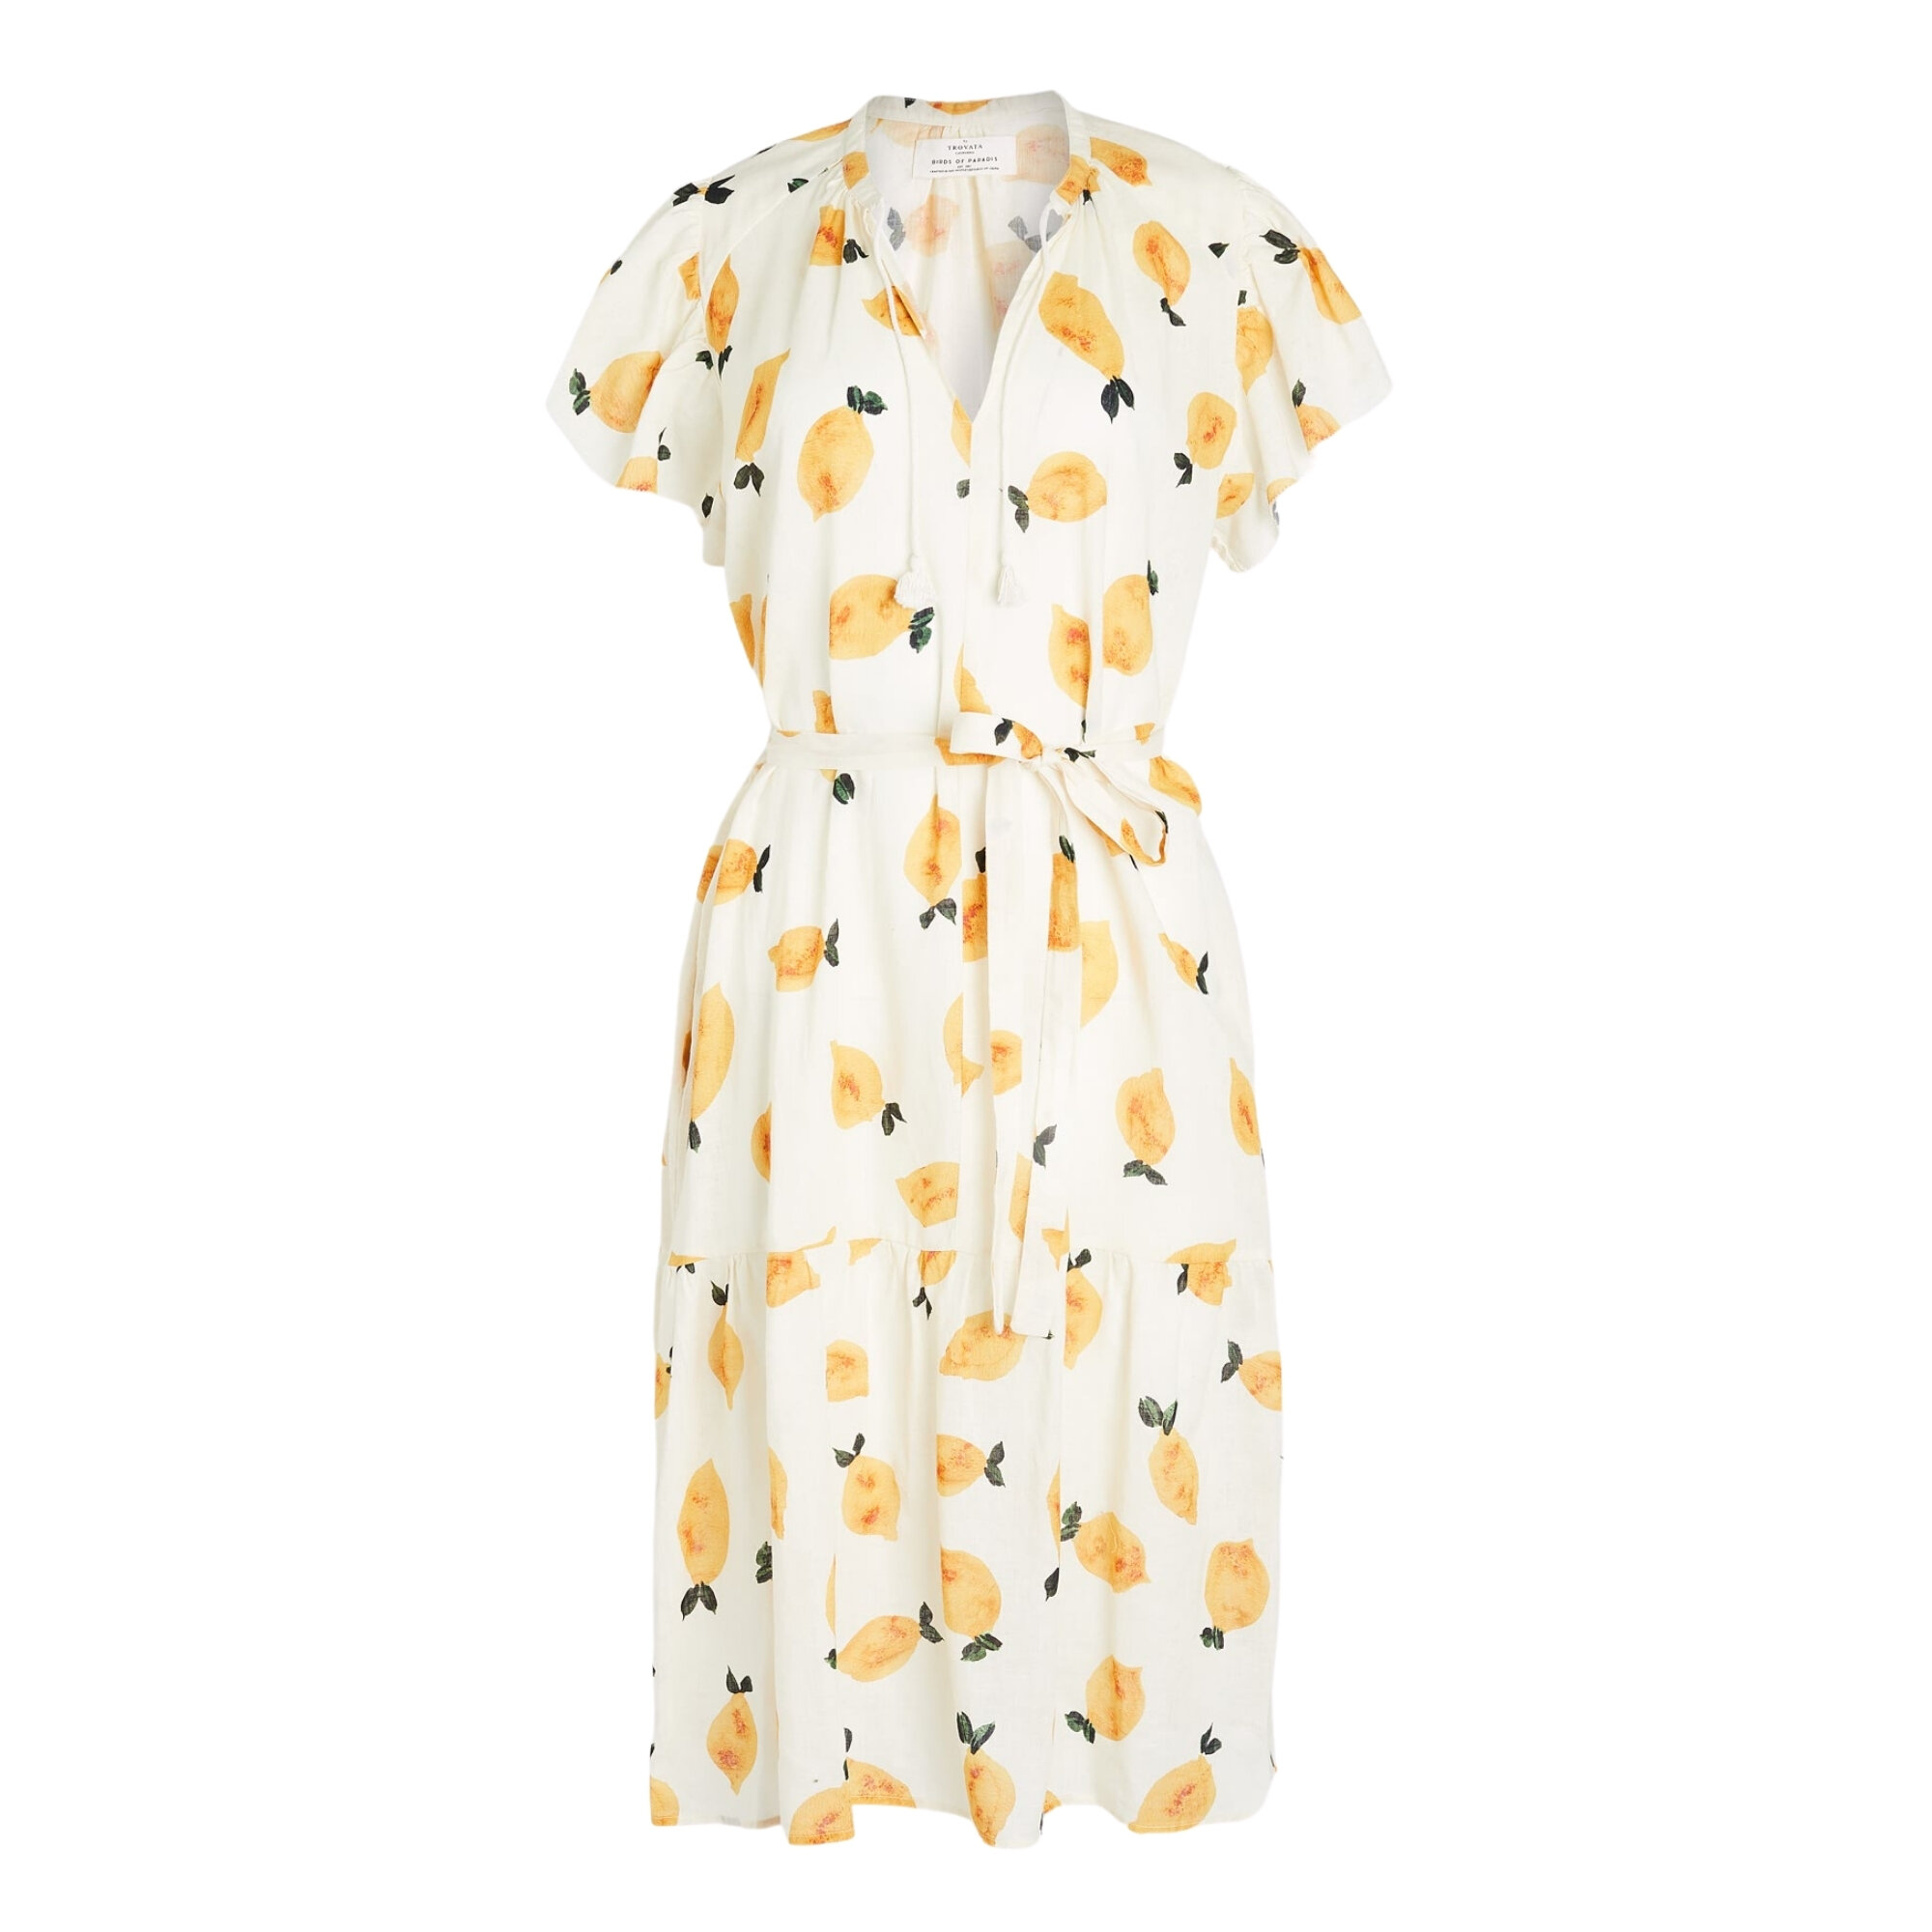 Emery Bohemian Dress, Shopbop, $308 (pockets, machine wash)